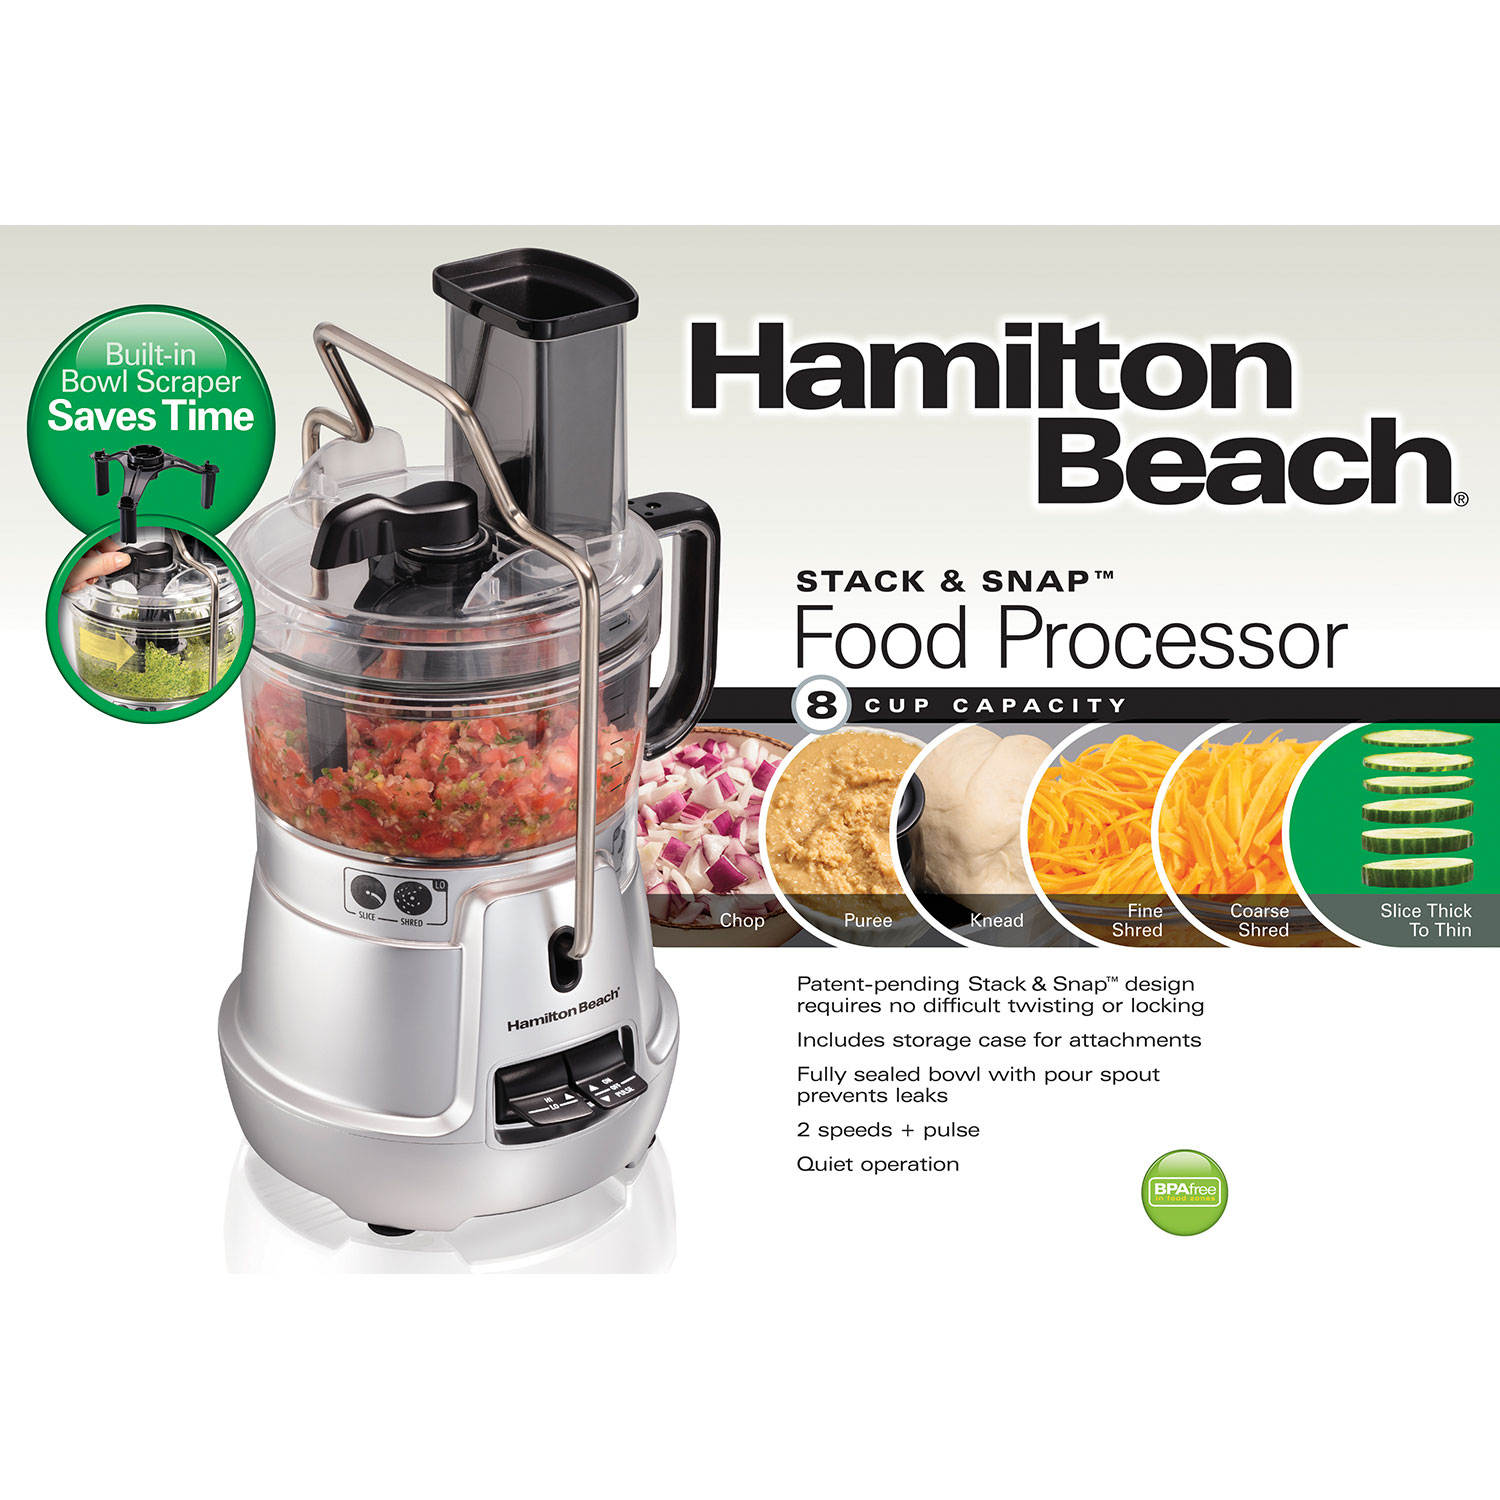 hamilton-beach-8-cup-stack-snap-food-processor-with-bowl-scraper